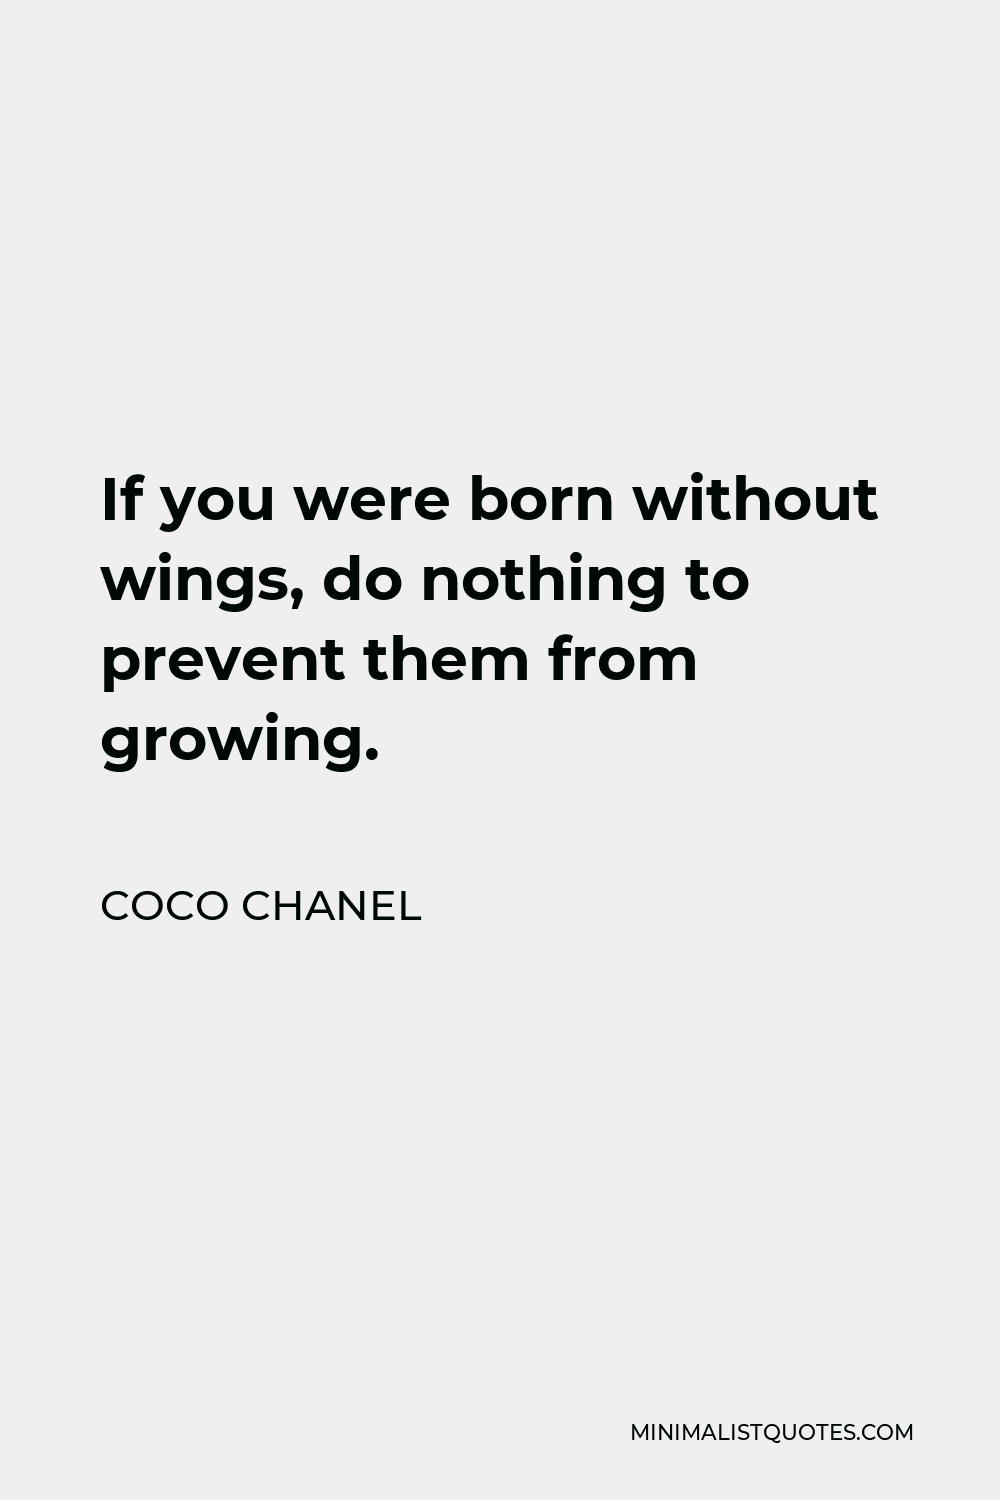 You were born an original, don't become a copy - Coco Chanel  - Hom –  ThePoshBible